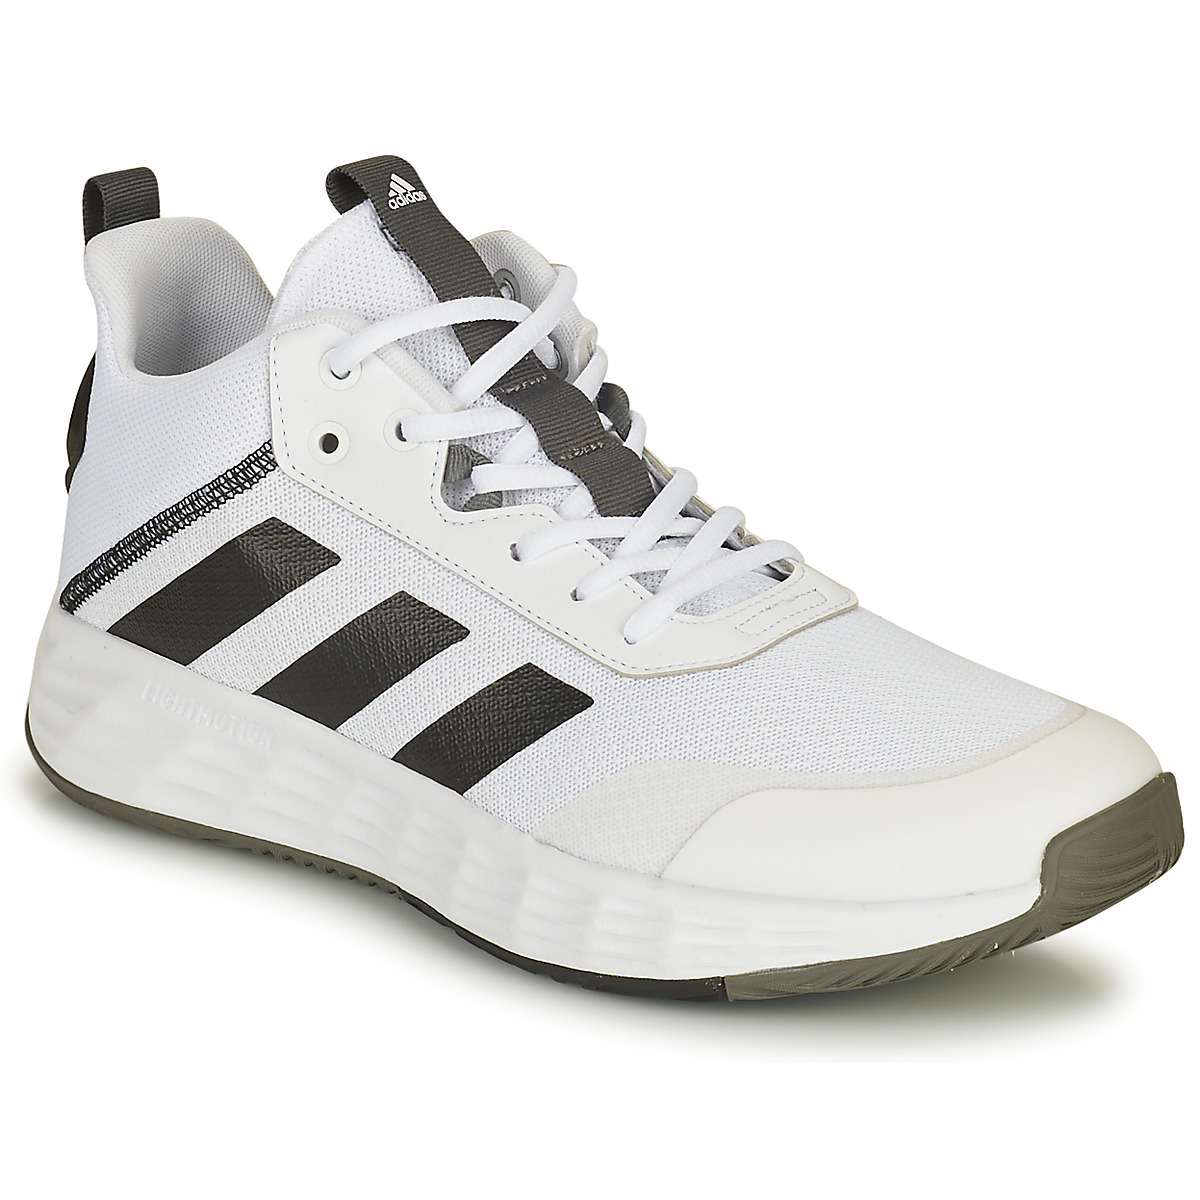 Adidas - Basketball Shoes in White - Spartoo Man GOOFASH